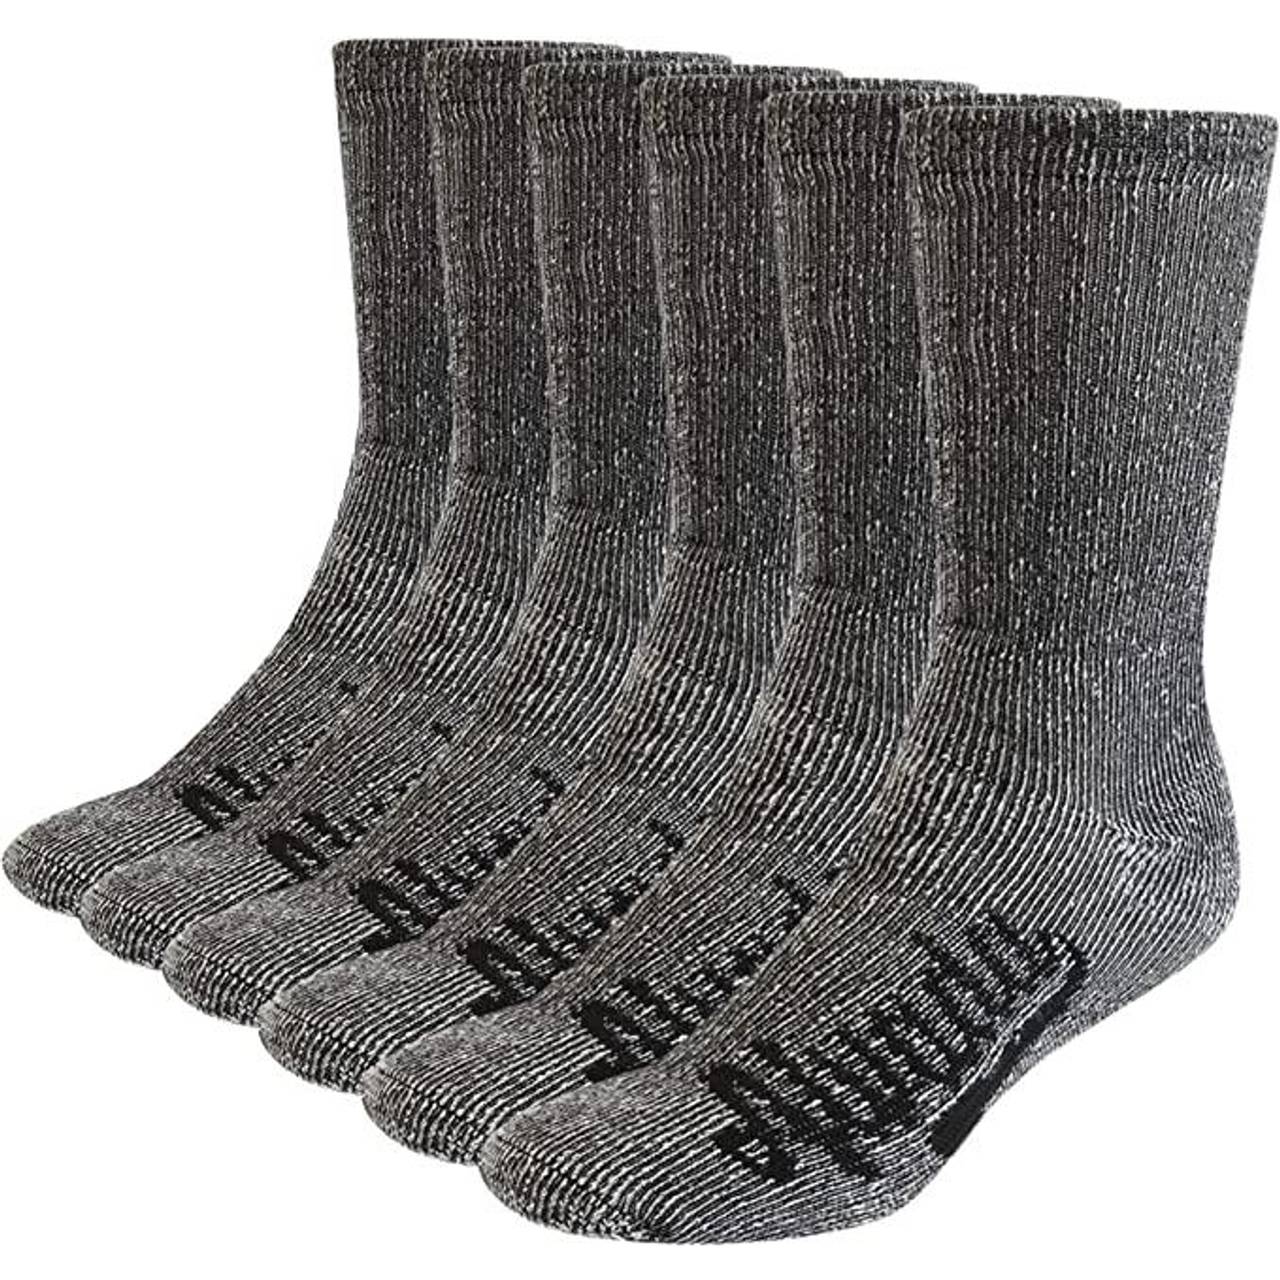 Alvada Merino Wool Hiking Socks 3-pack • Prices